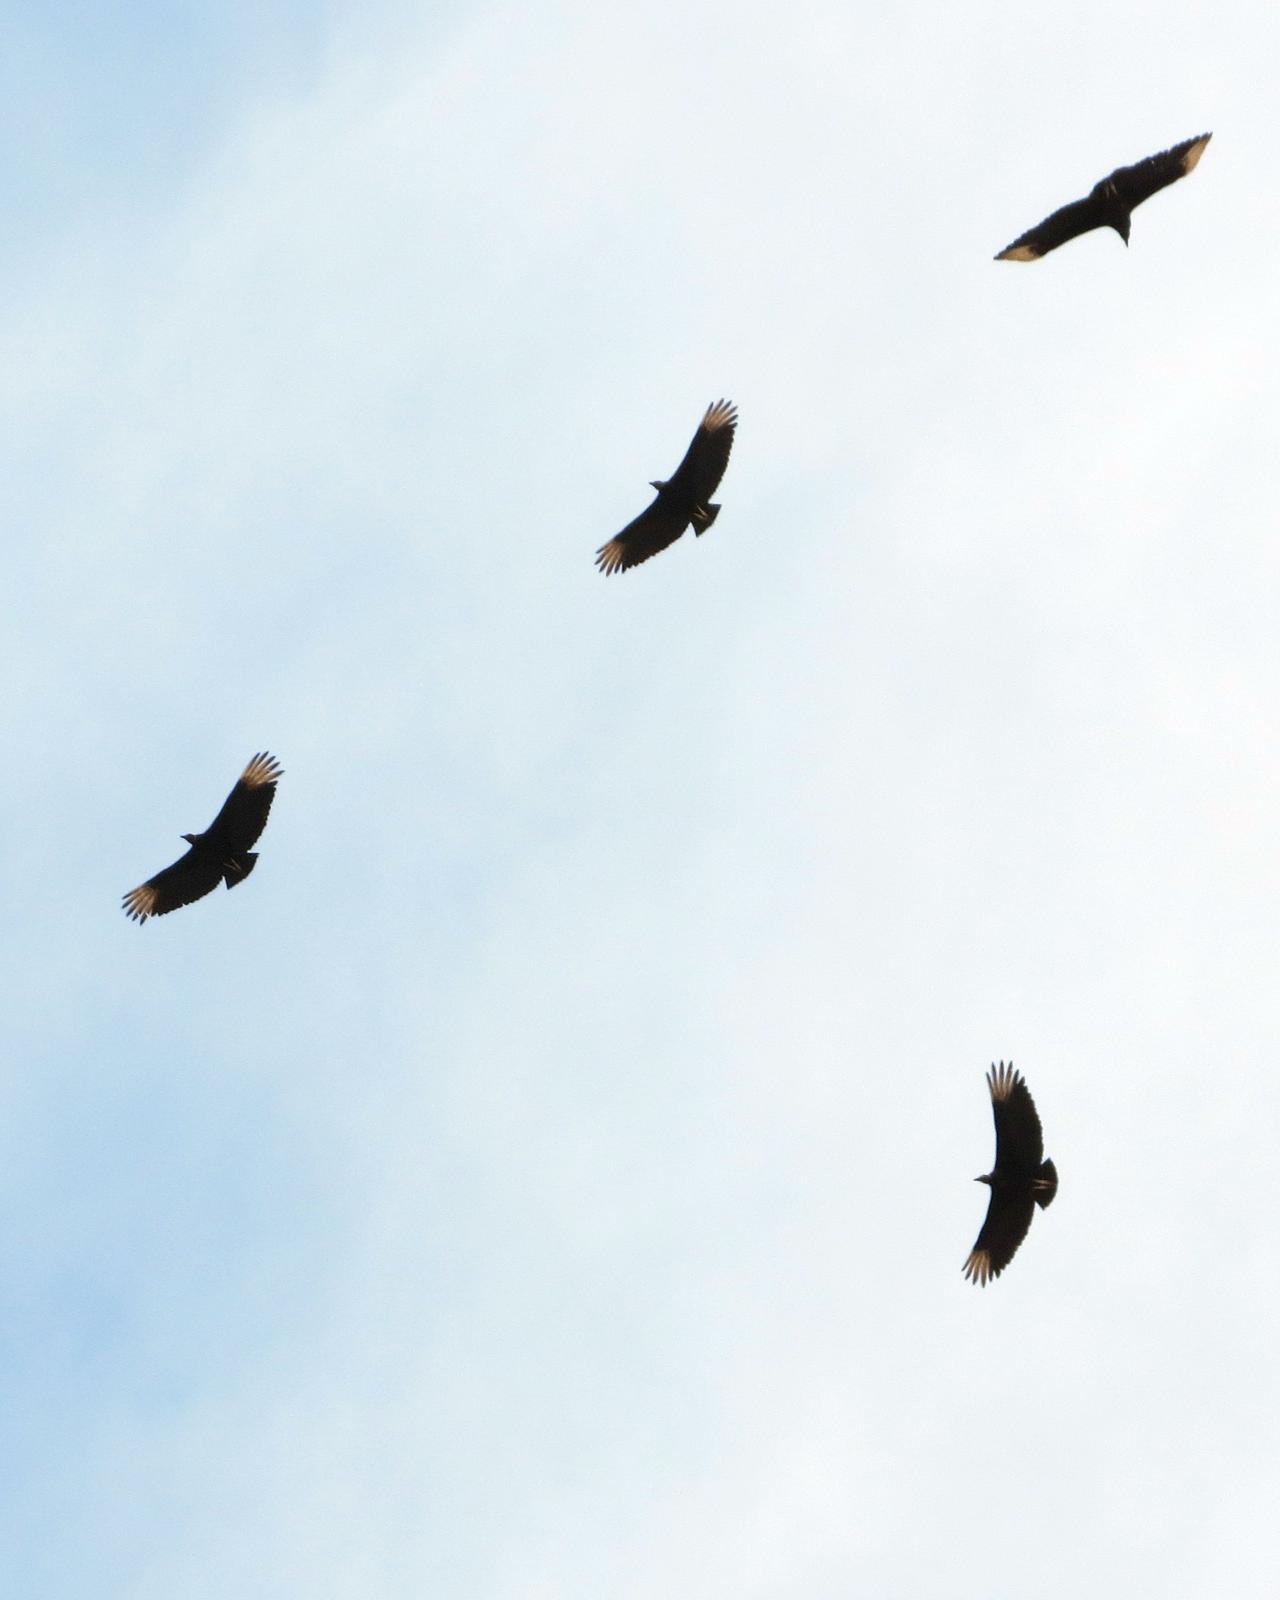 Black Vulture Photo by Anna E. Wittmer